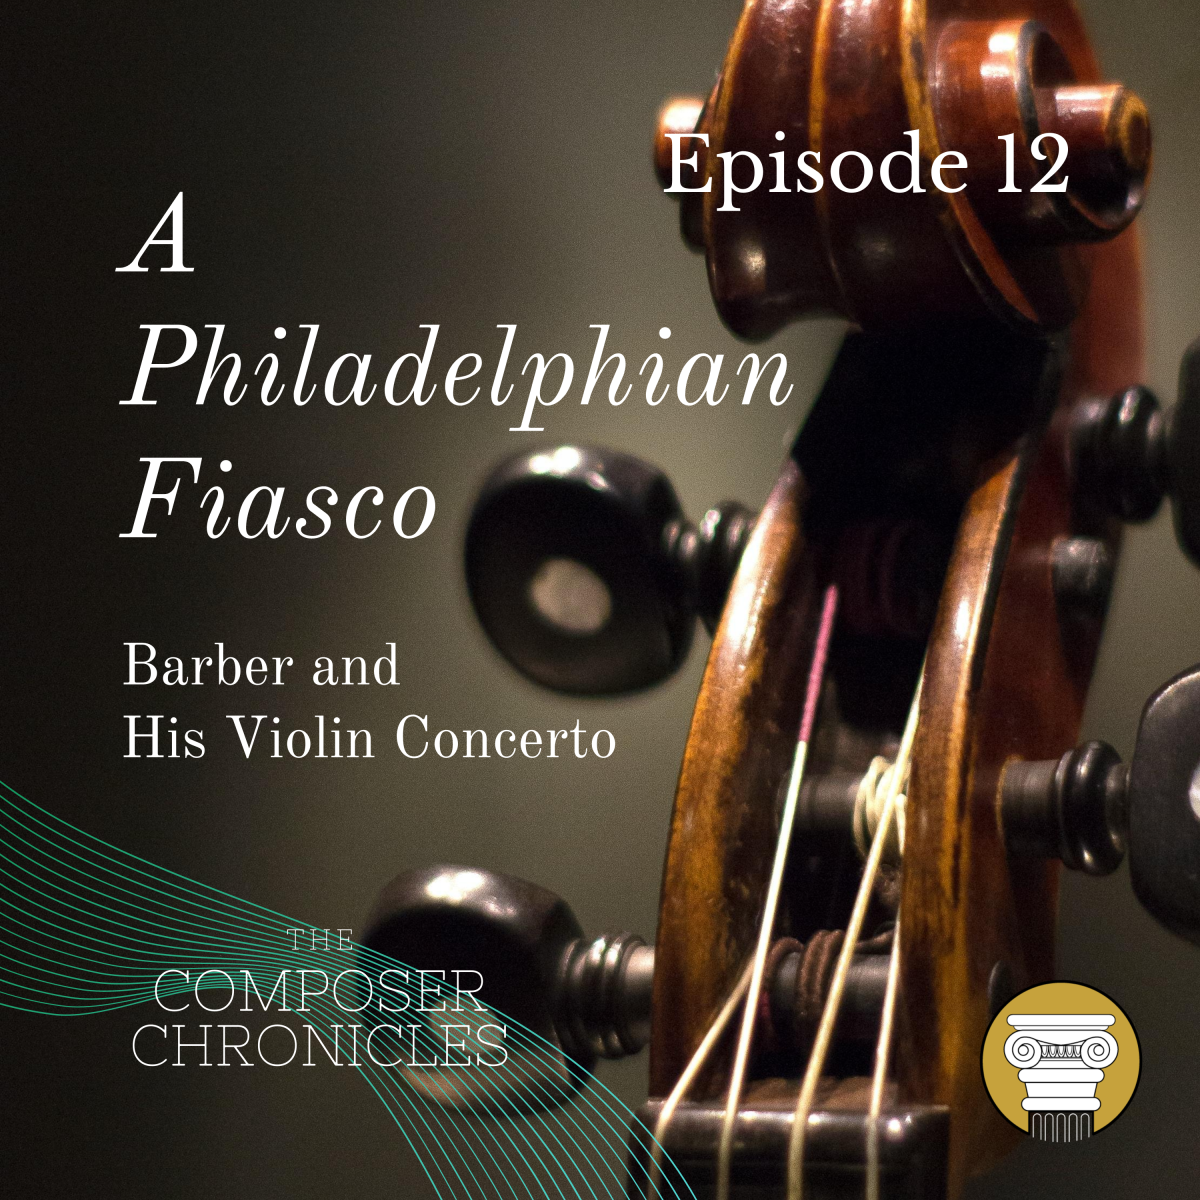 Ep. 12: A Philadelphian Fiasco – Barber and His Violin Concerto